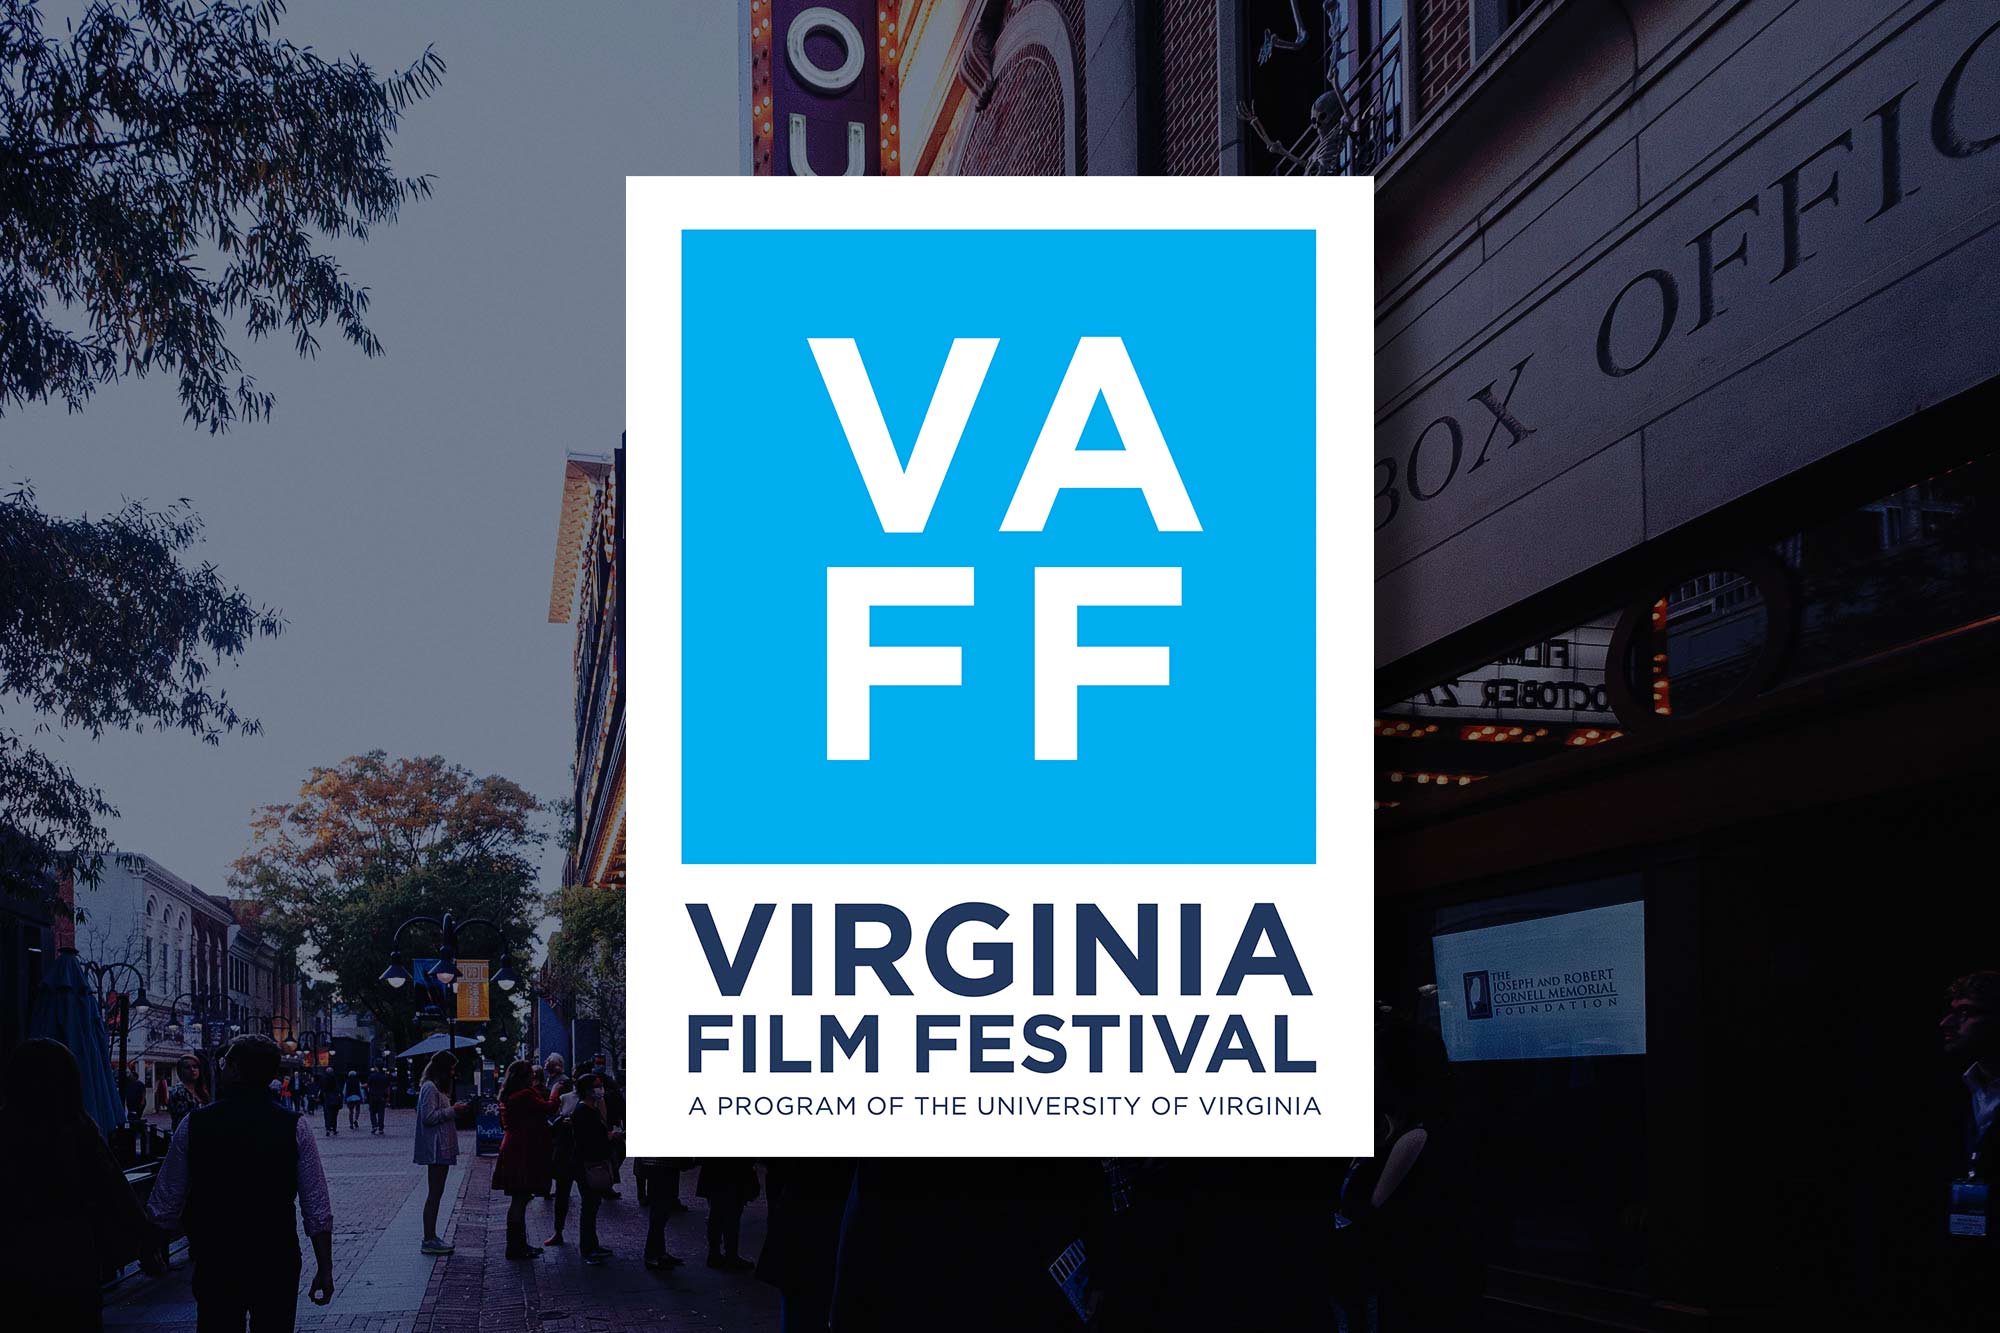 Virginia Film Festival, a program of the University of Virginia